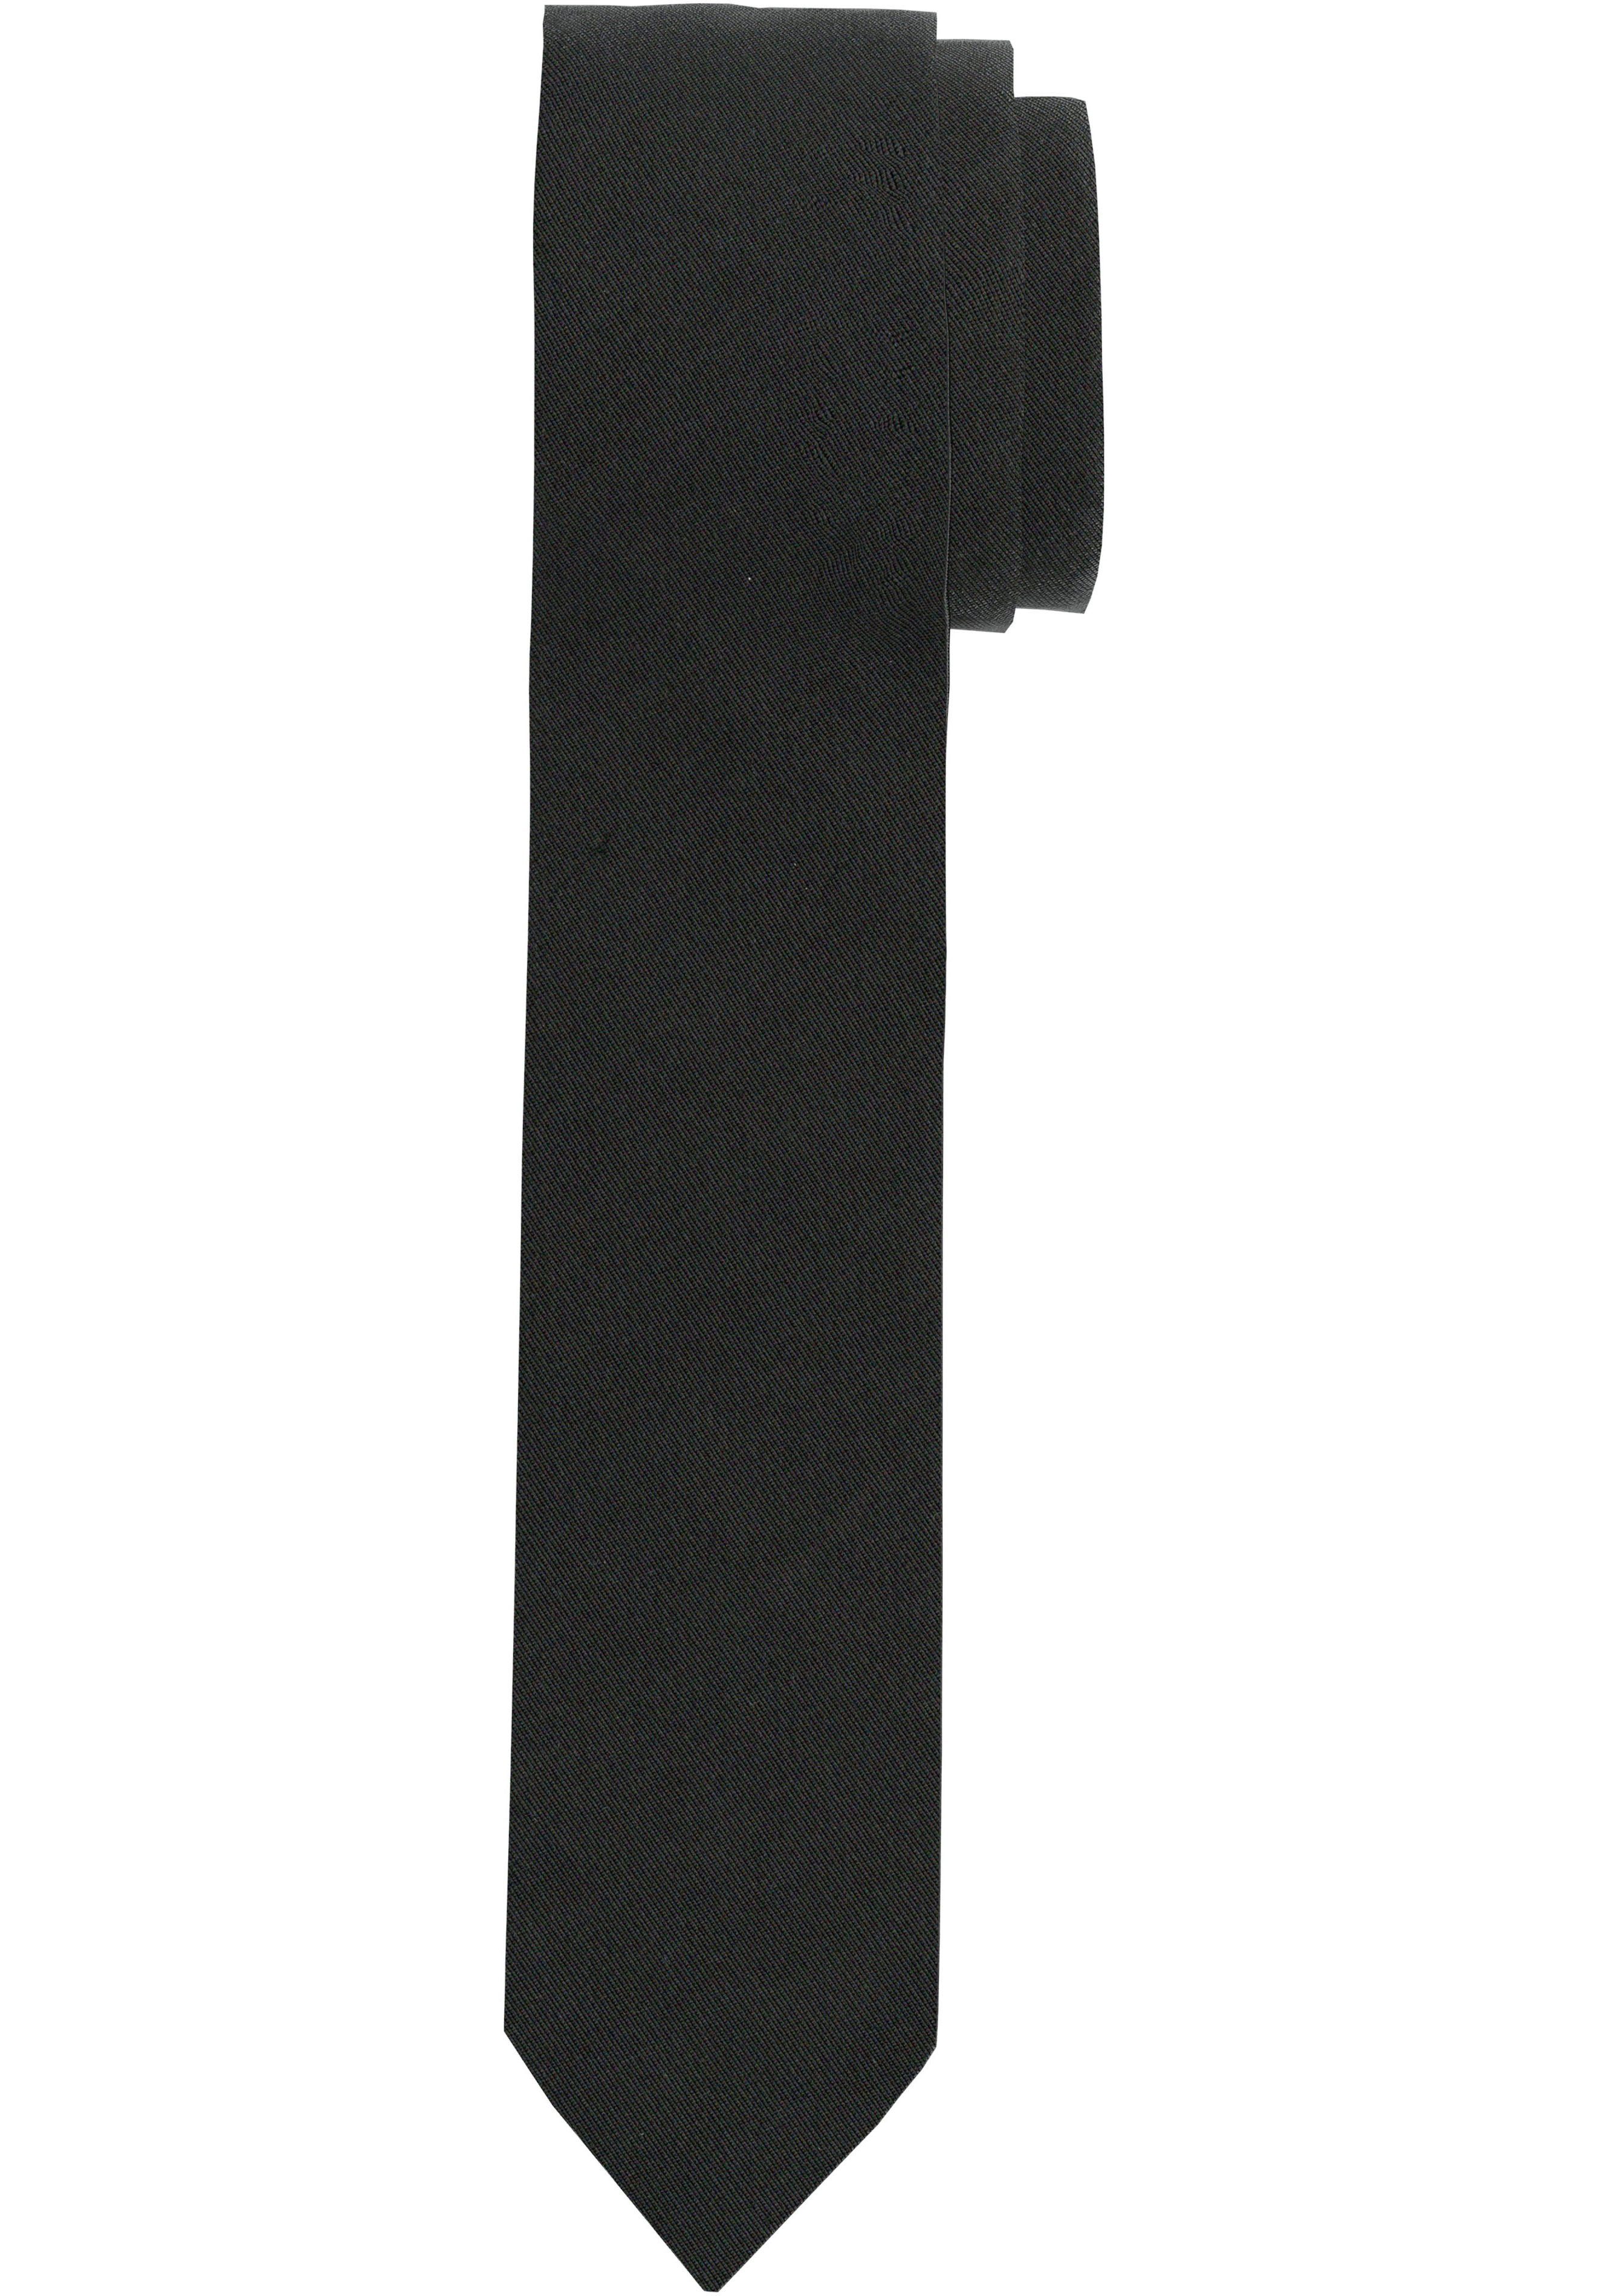 Krawatte Krawatte schwarz OLYMP Slim